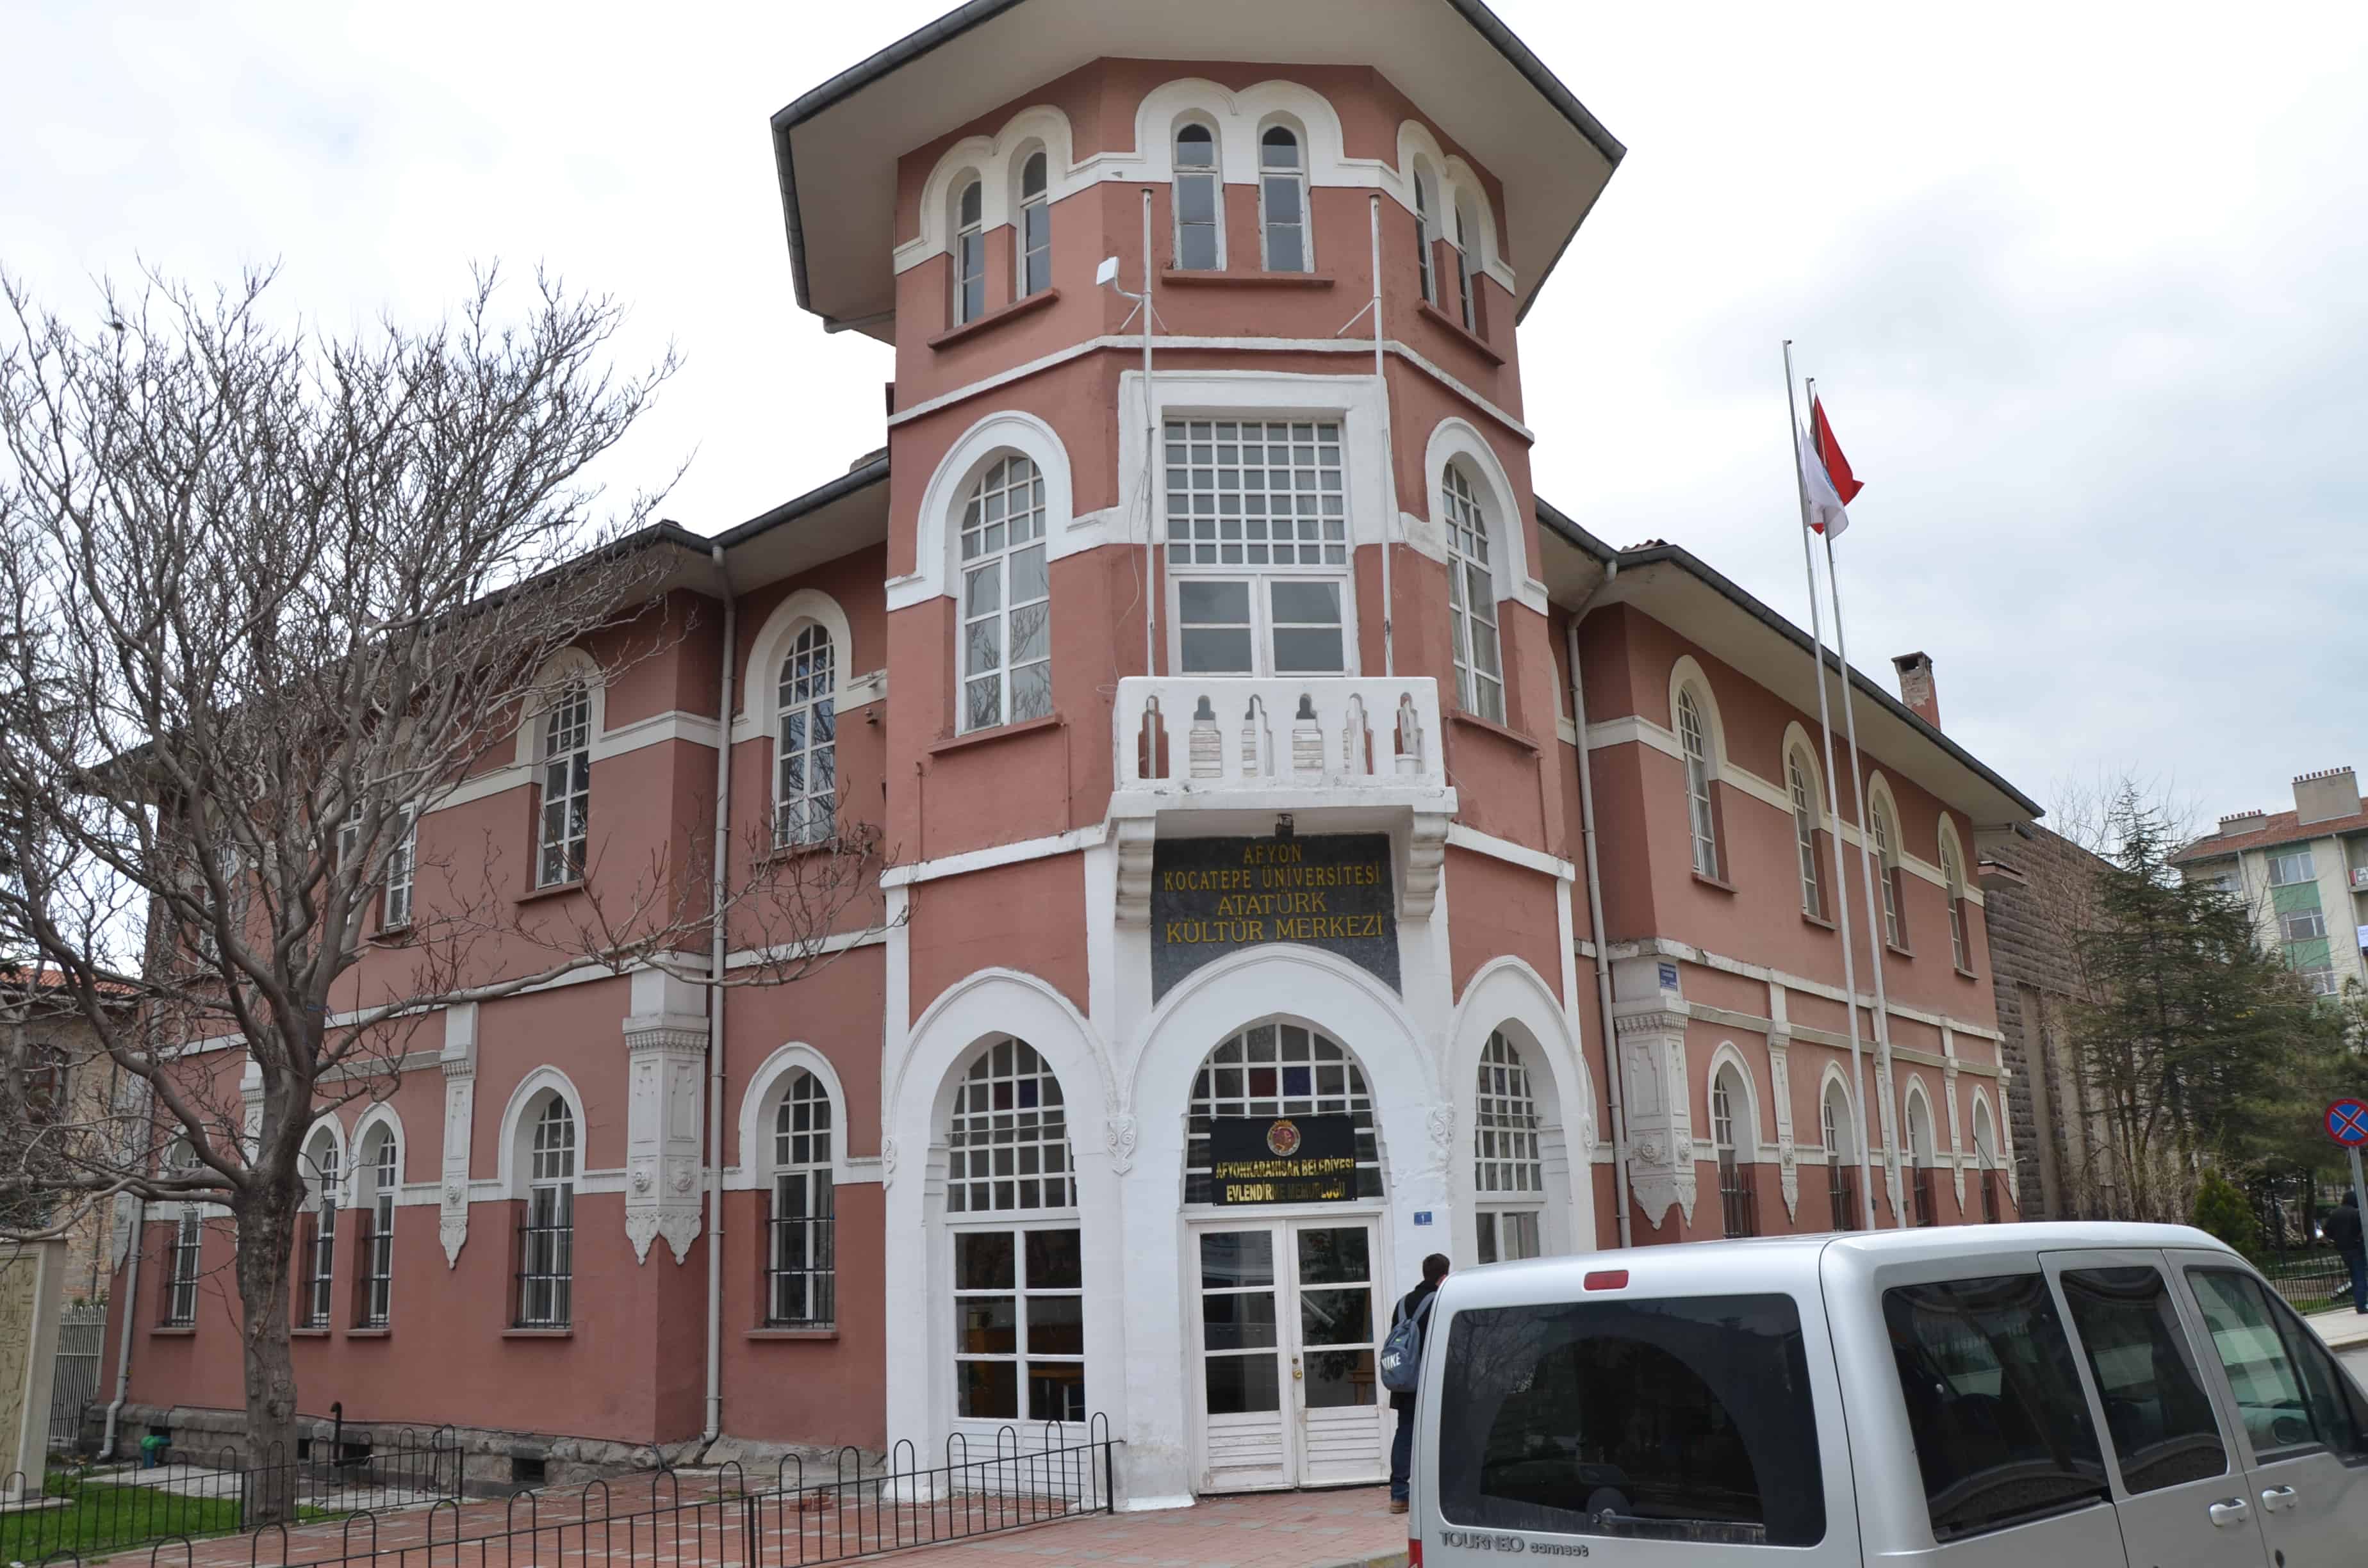 Atatürk Cultural Center in Afyon, Turkey